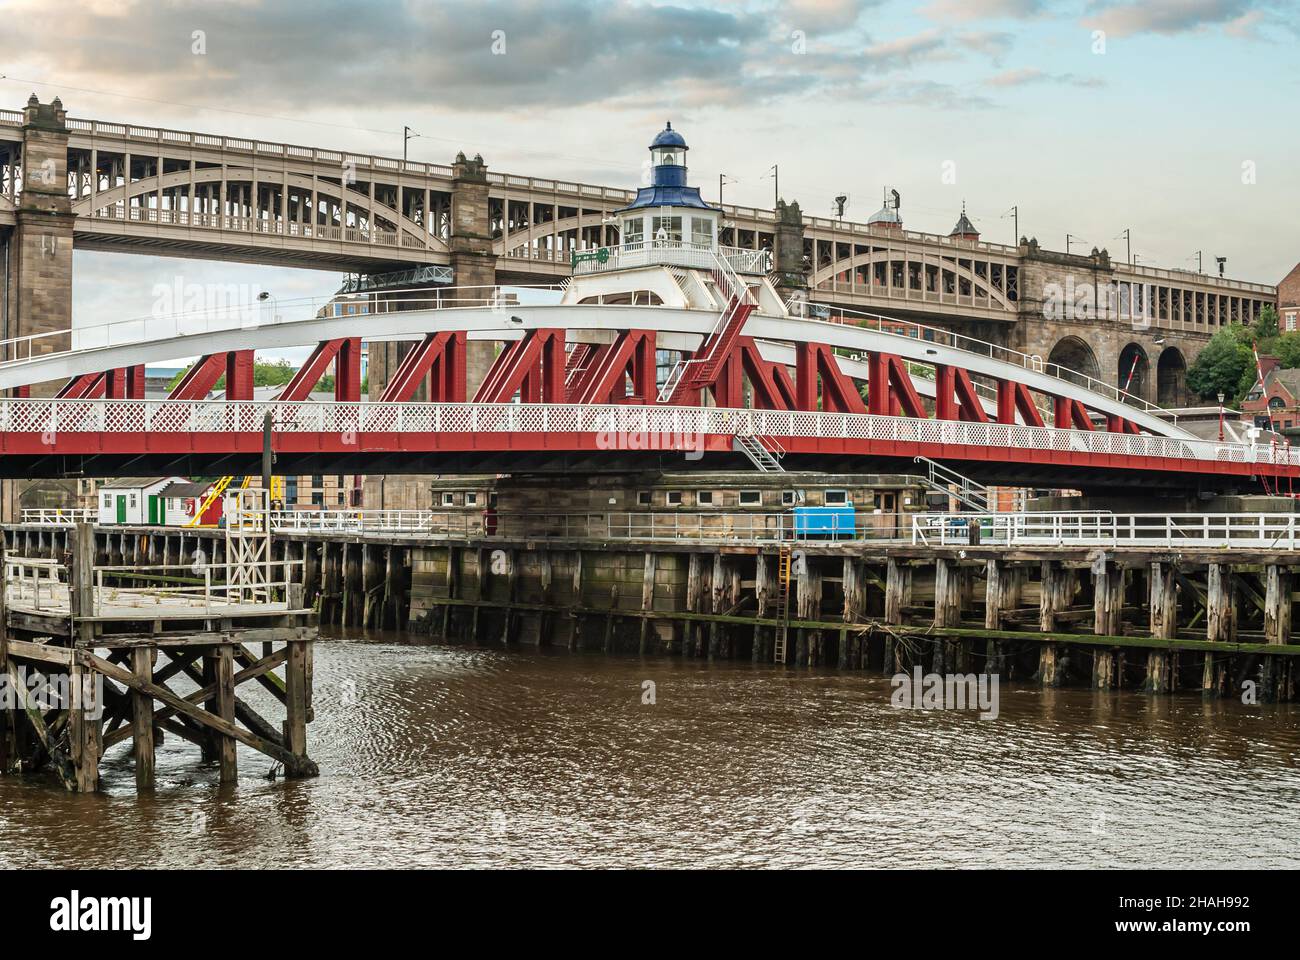 High Level Bridge and Swing Bridge across River Tyne, Newcastle upon Tyne, Gateshead, England, UK Stock Photo